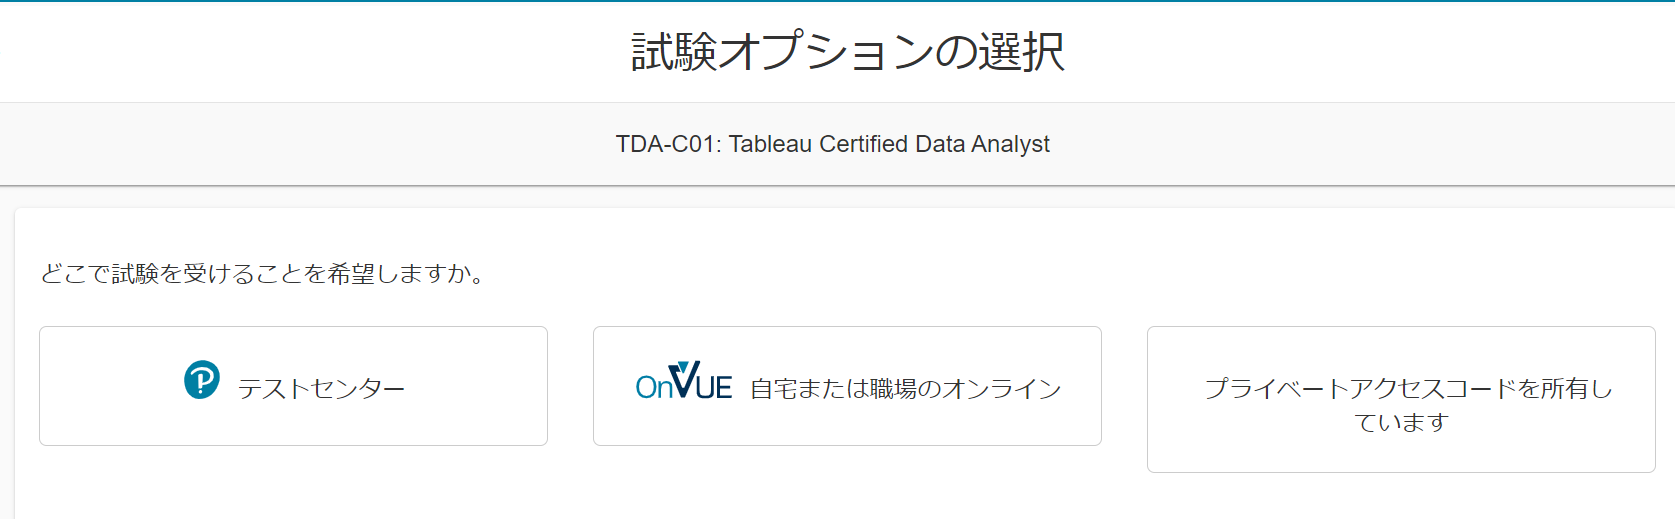 tableau certified data analyst preparation